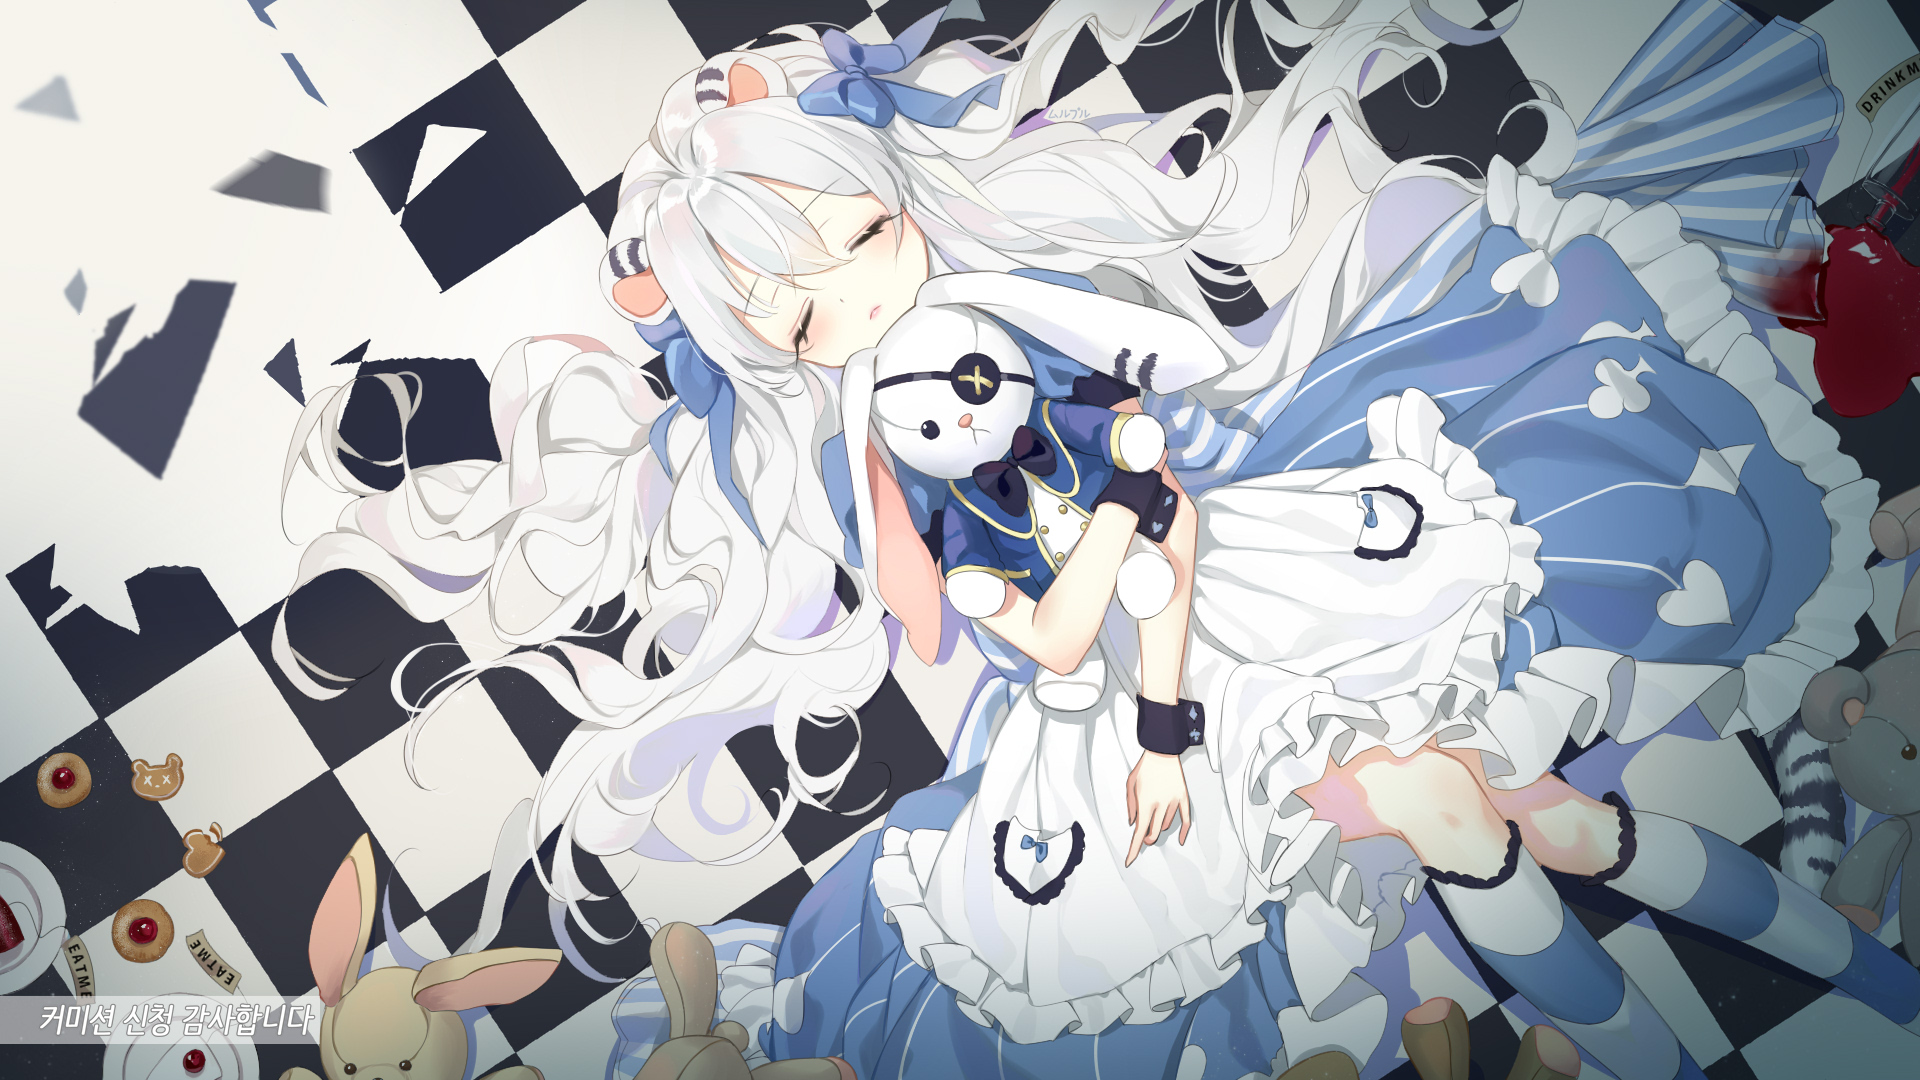 Anime Alice In Wonderland 4k Ultra HD Wallpaper by Ueda Ryo